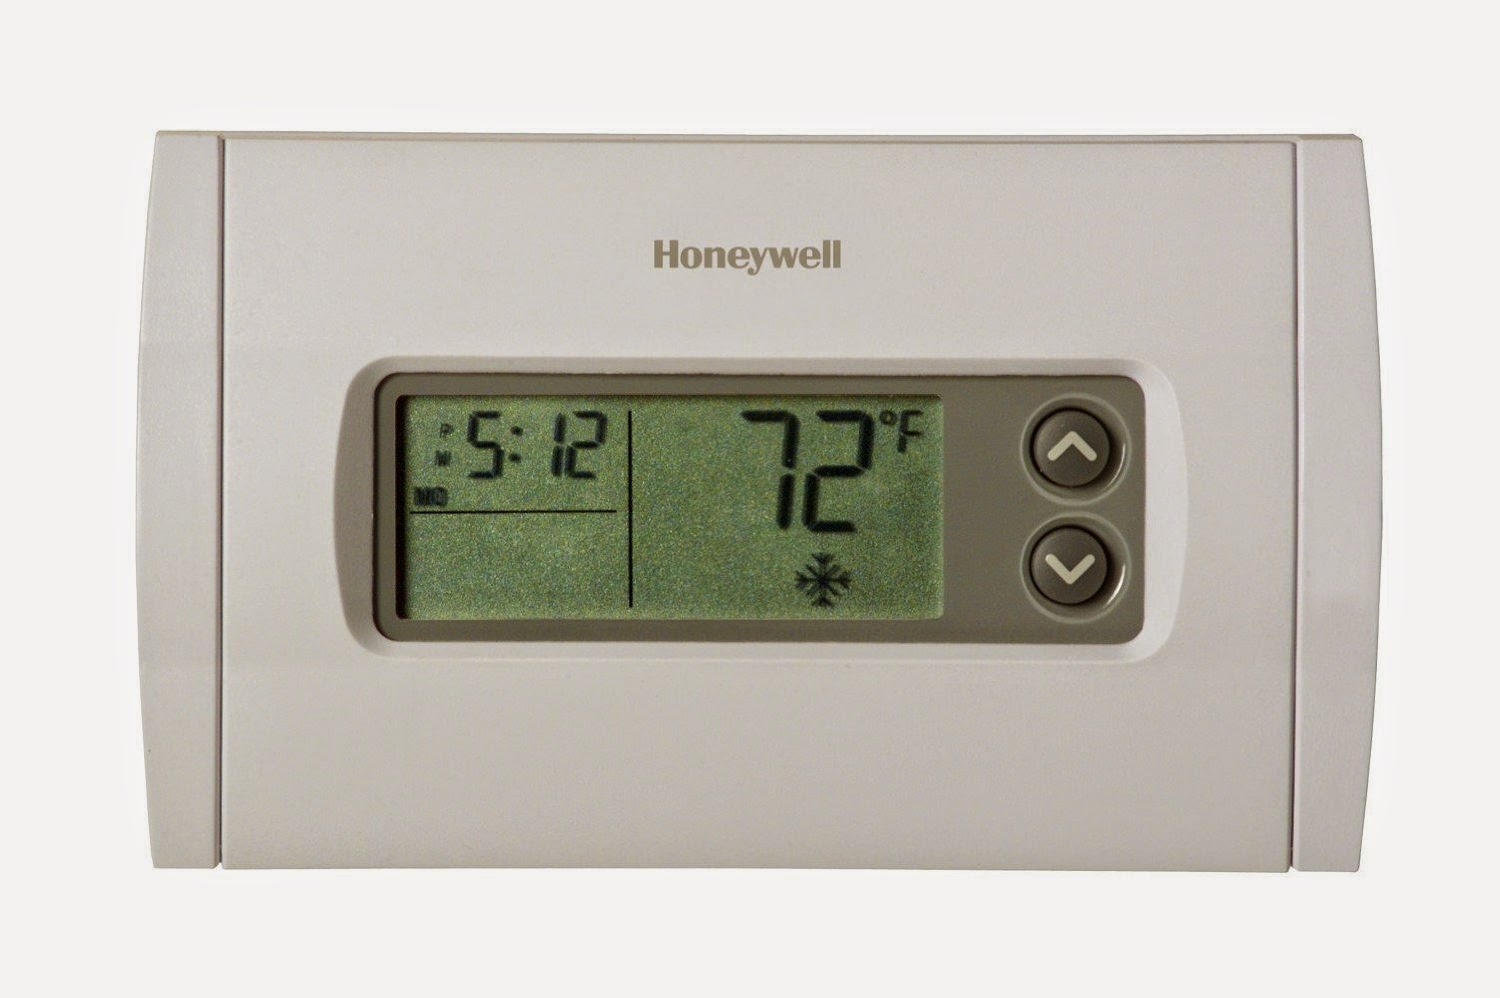 Honeywell Thermostat Manual Rth230b